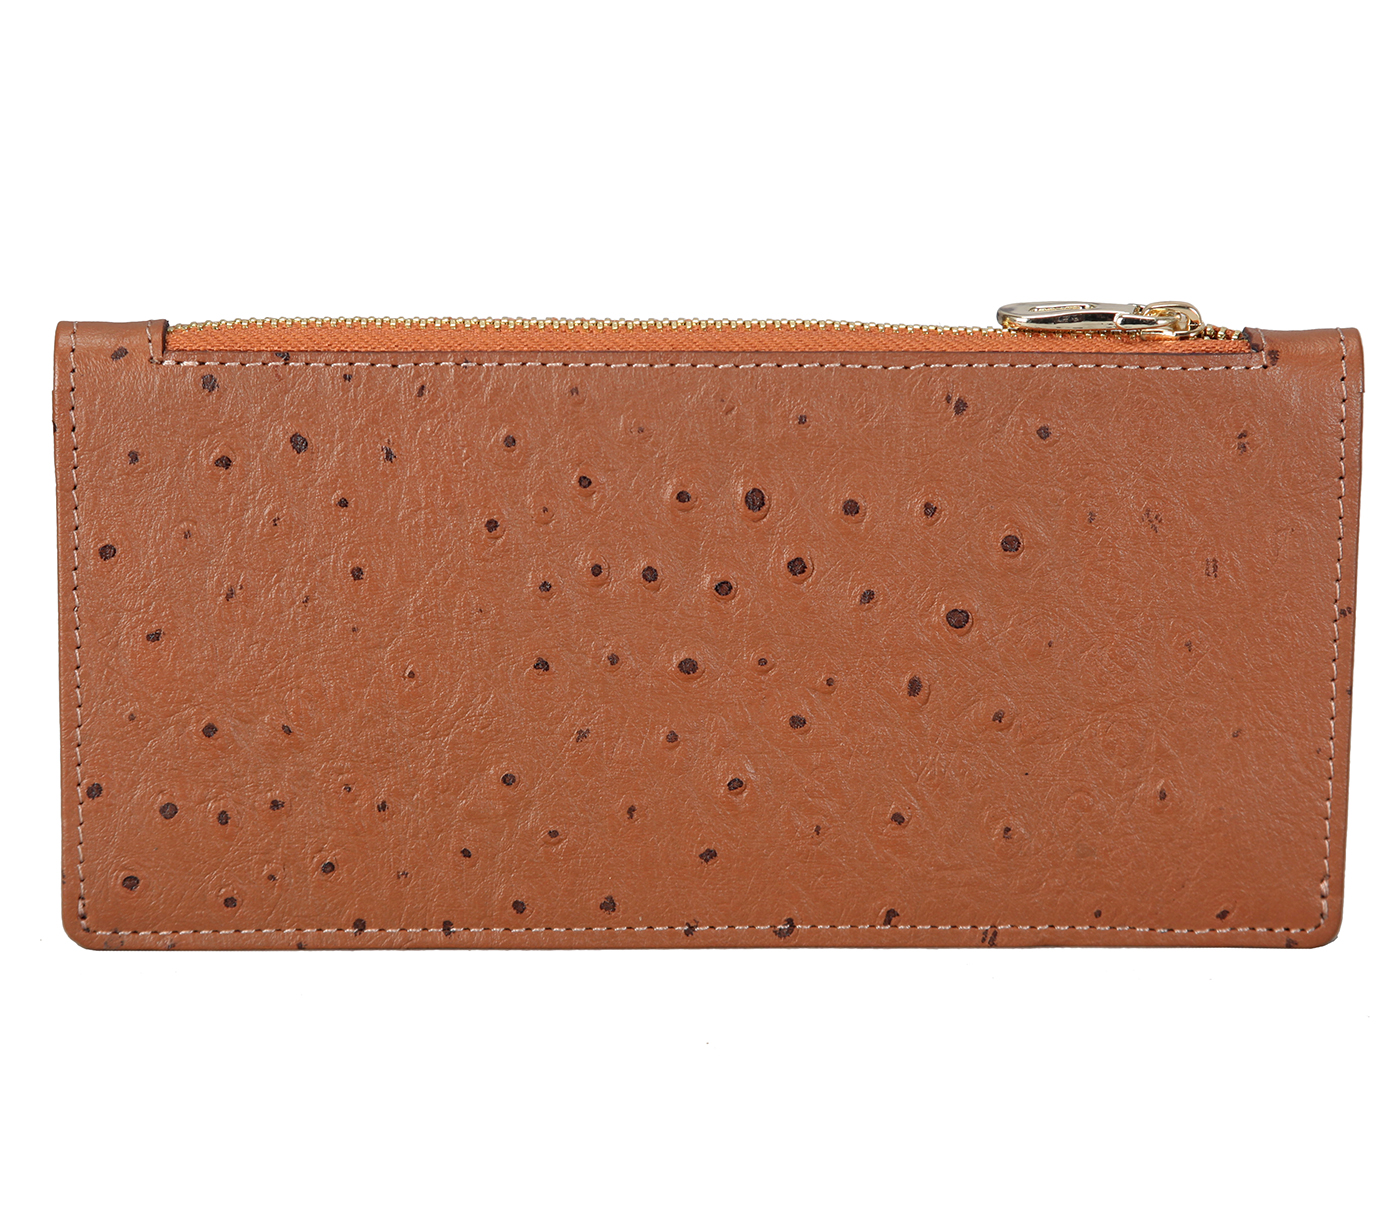 W314-Montana-Women's bifold button closing wallet in Genuine Leather - Tan